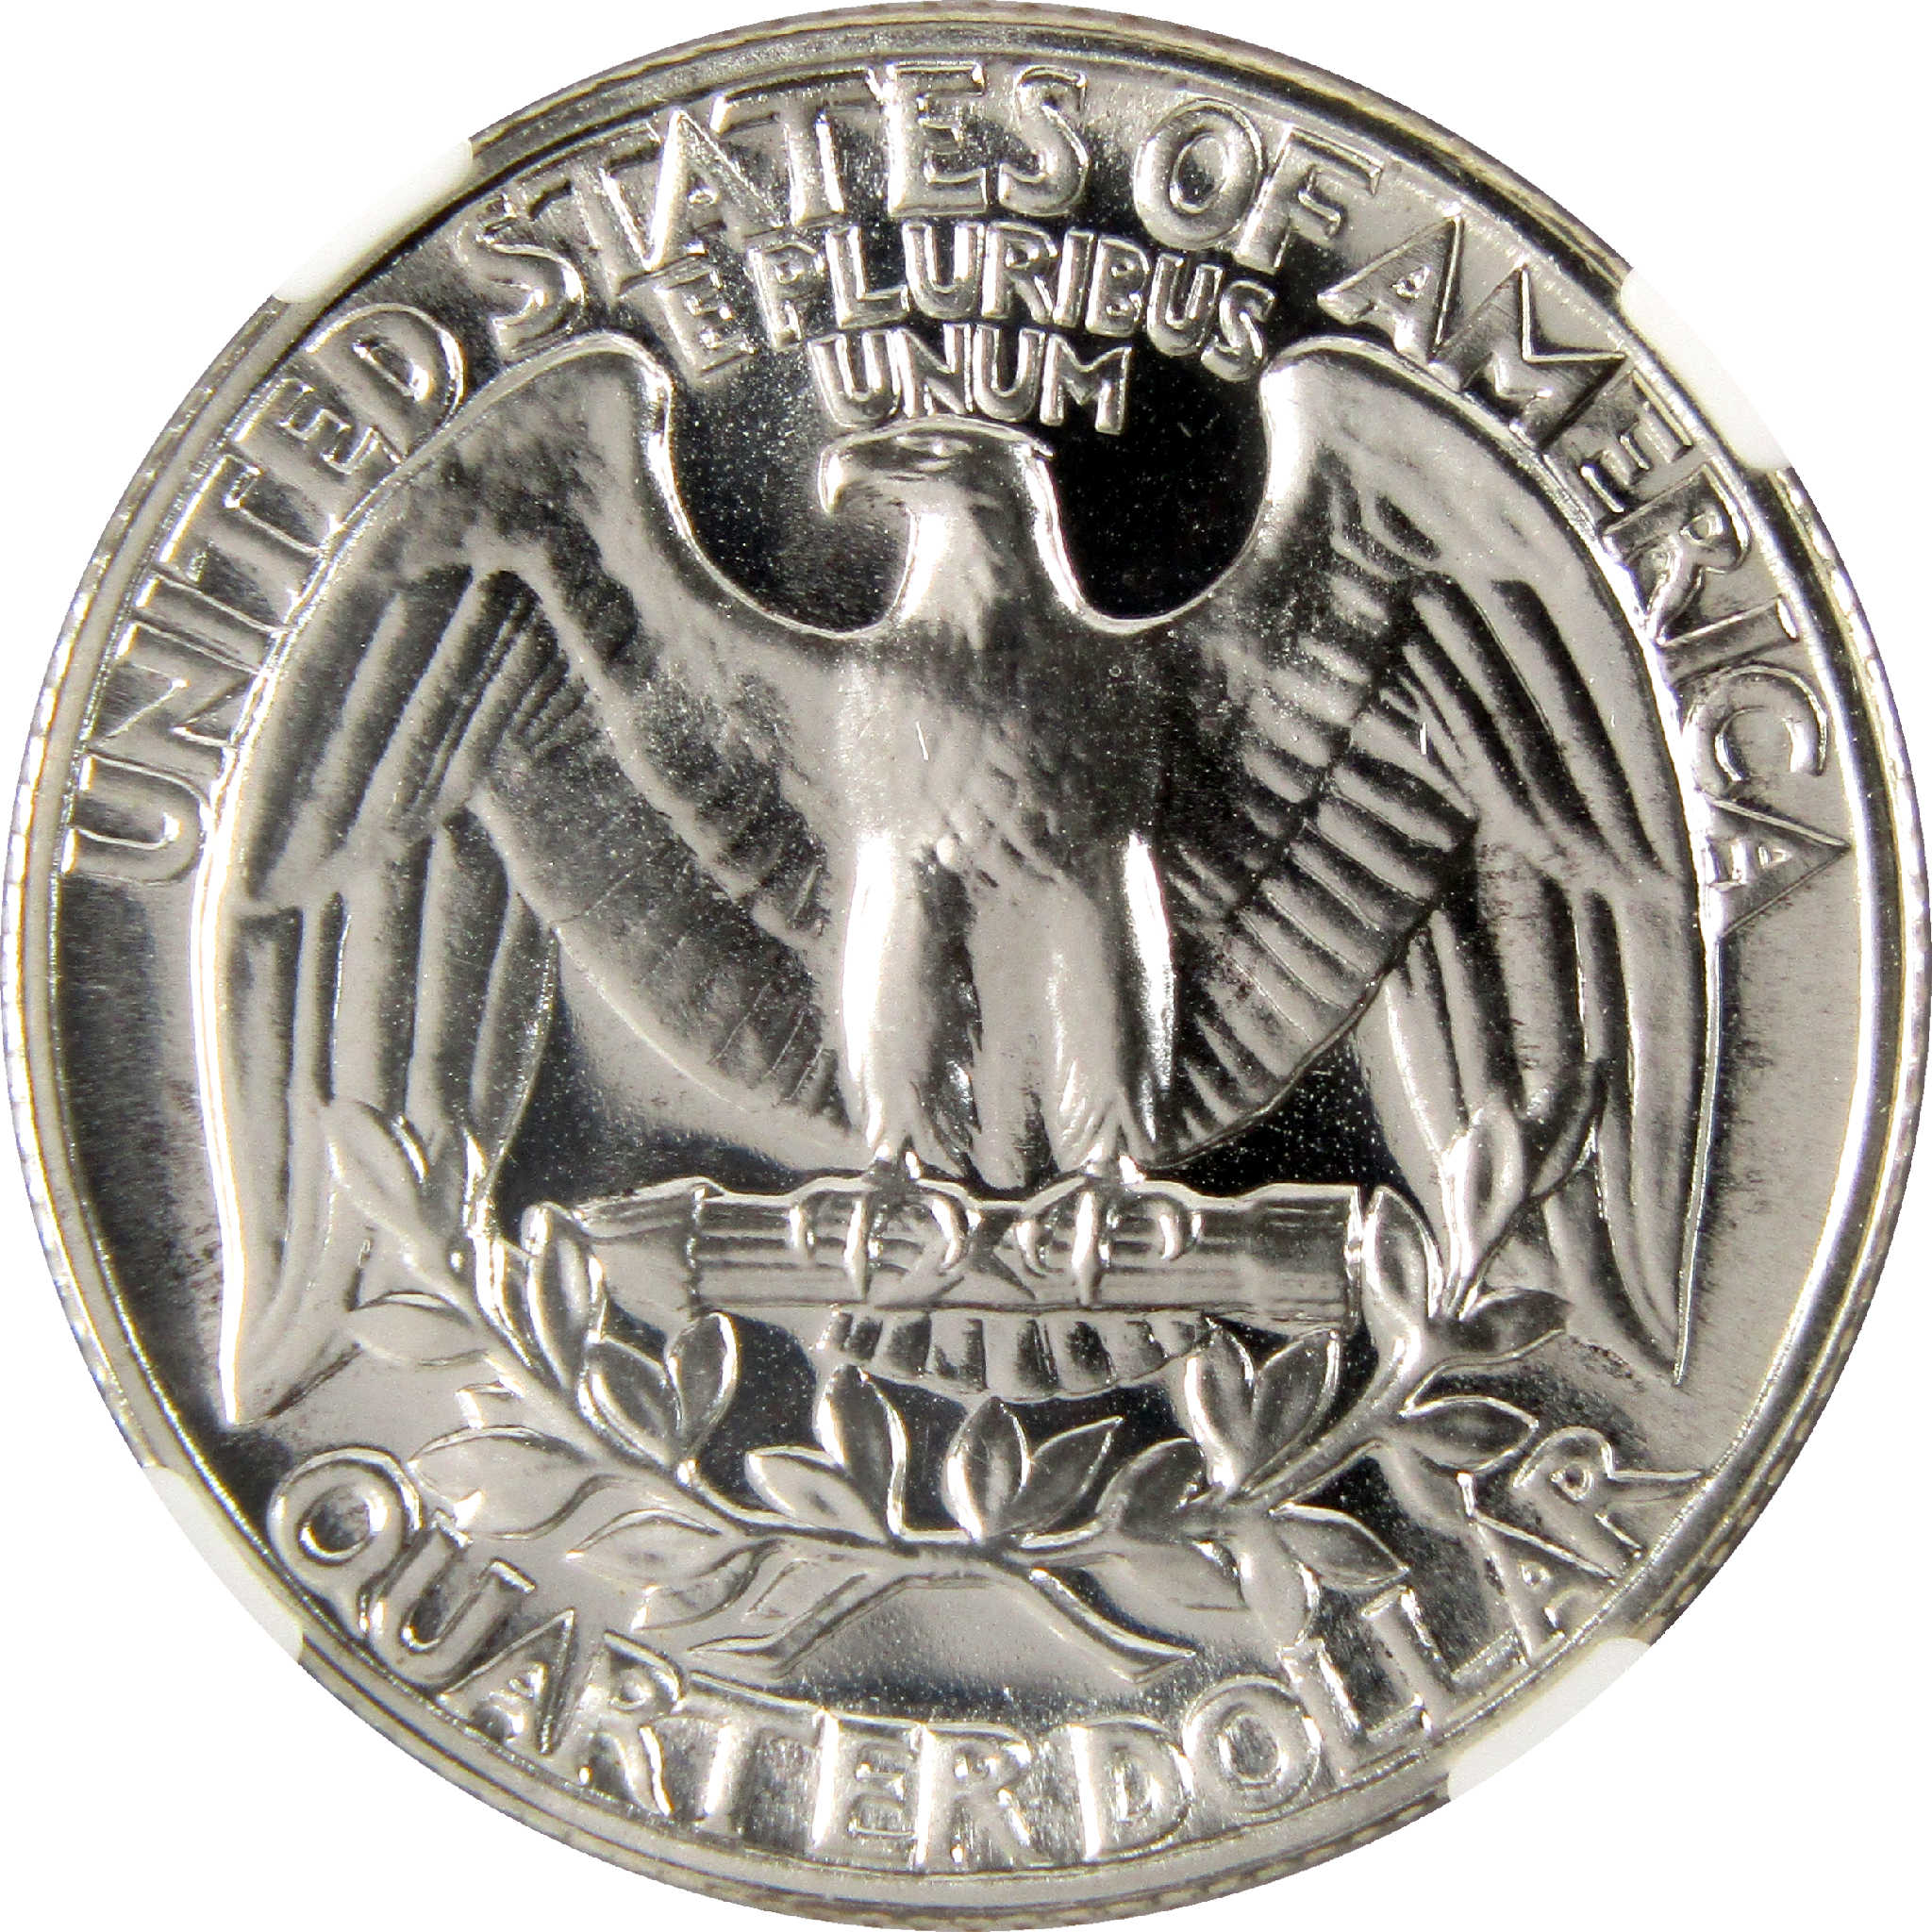 1956 Washington Quarter PF 69 NGC Silver 25c Proof Coin SKU:CPC6429